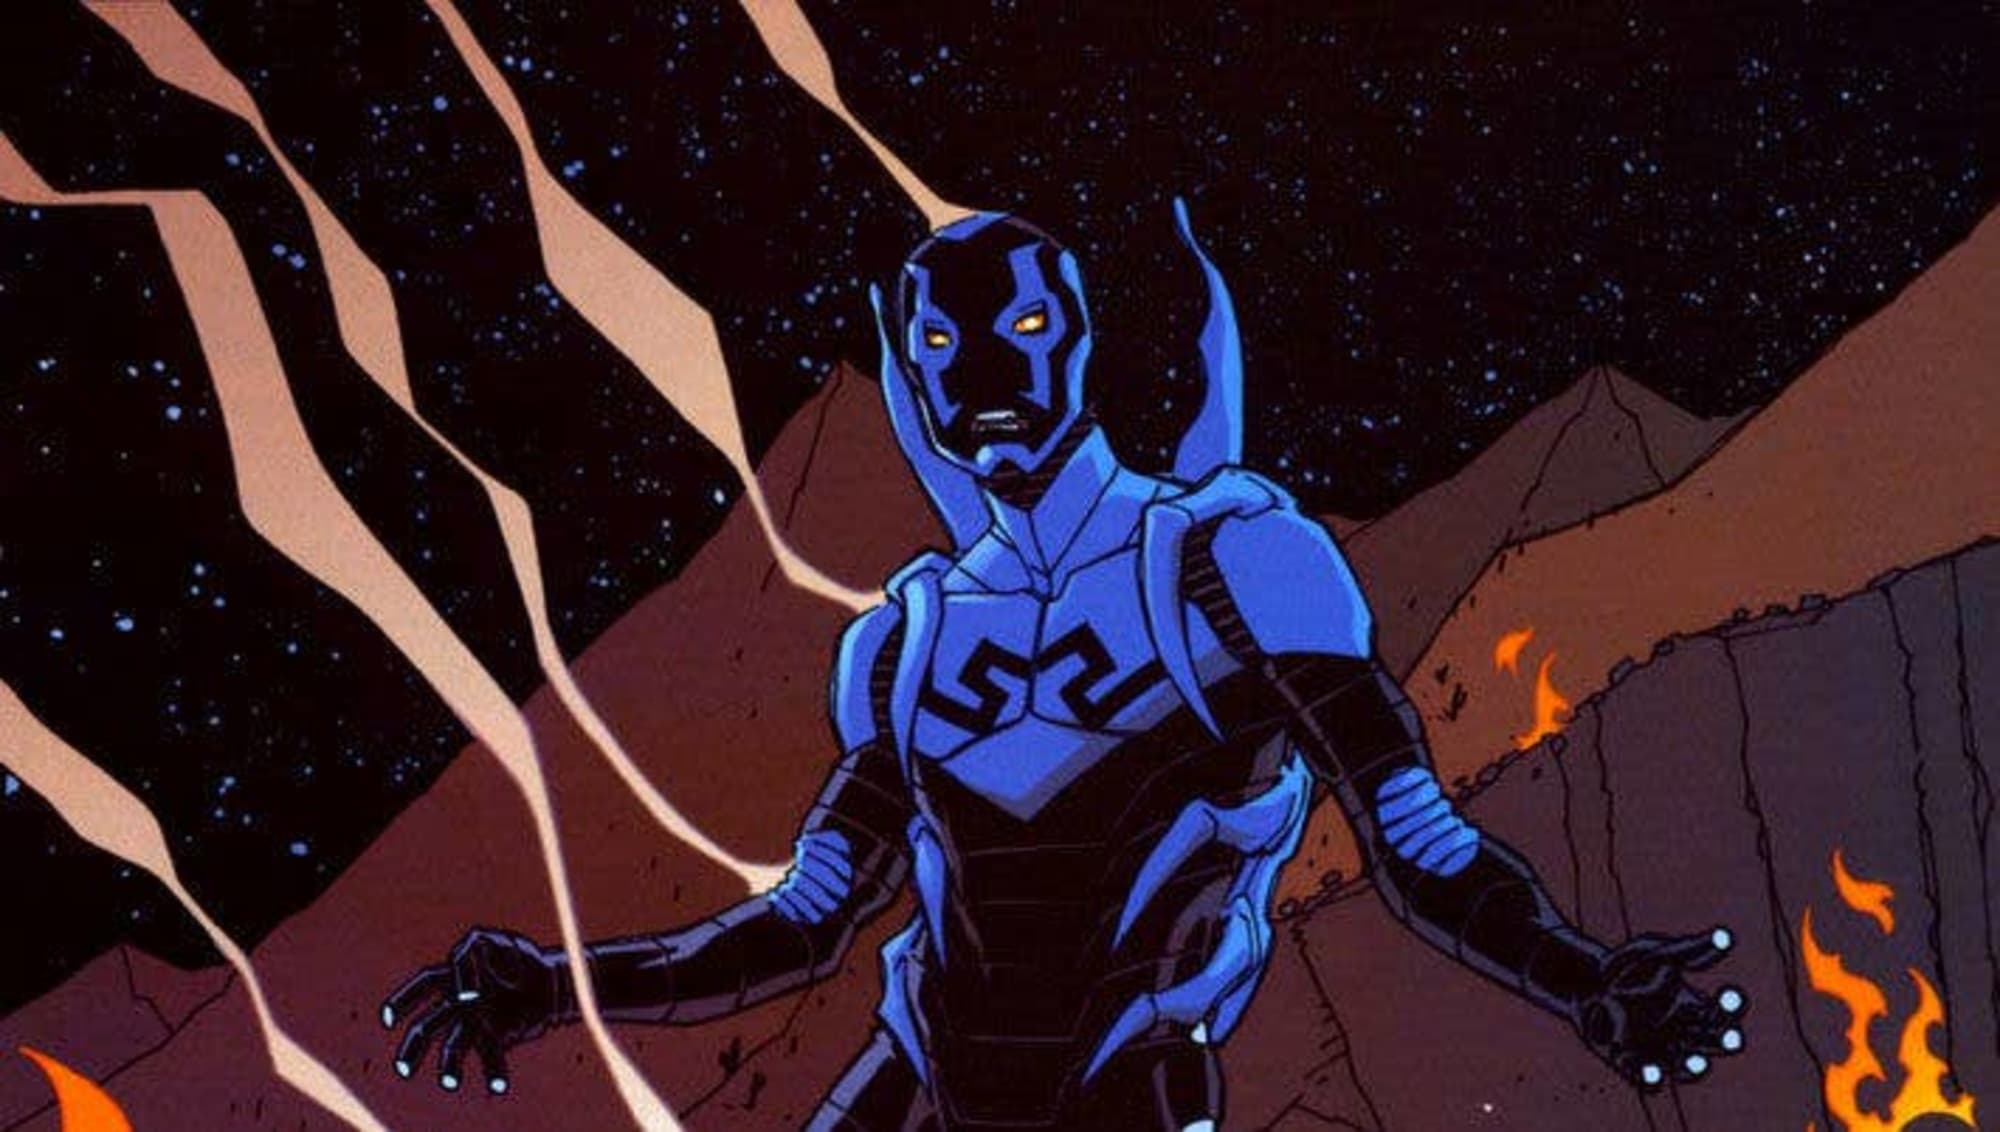 'Blue Beetle' Meet the Latino superhero getting his own DC movie